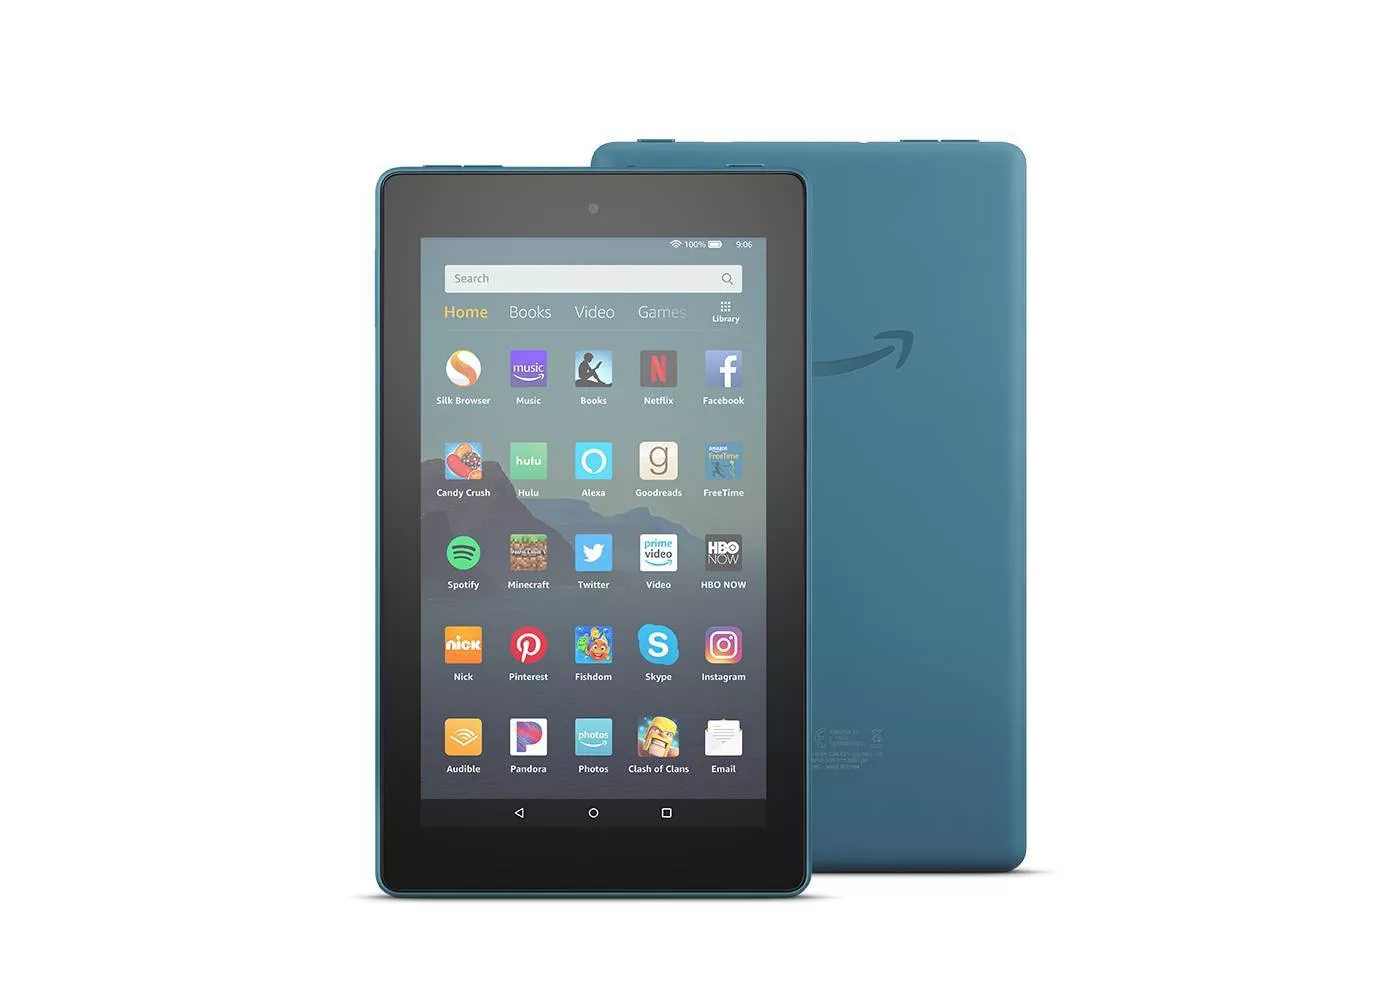 Amazon Fire 7 Tablet 16 GB - Twilight Blue - image 1 of 7